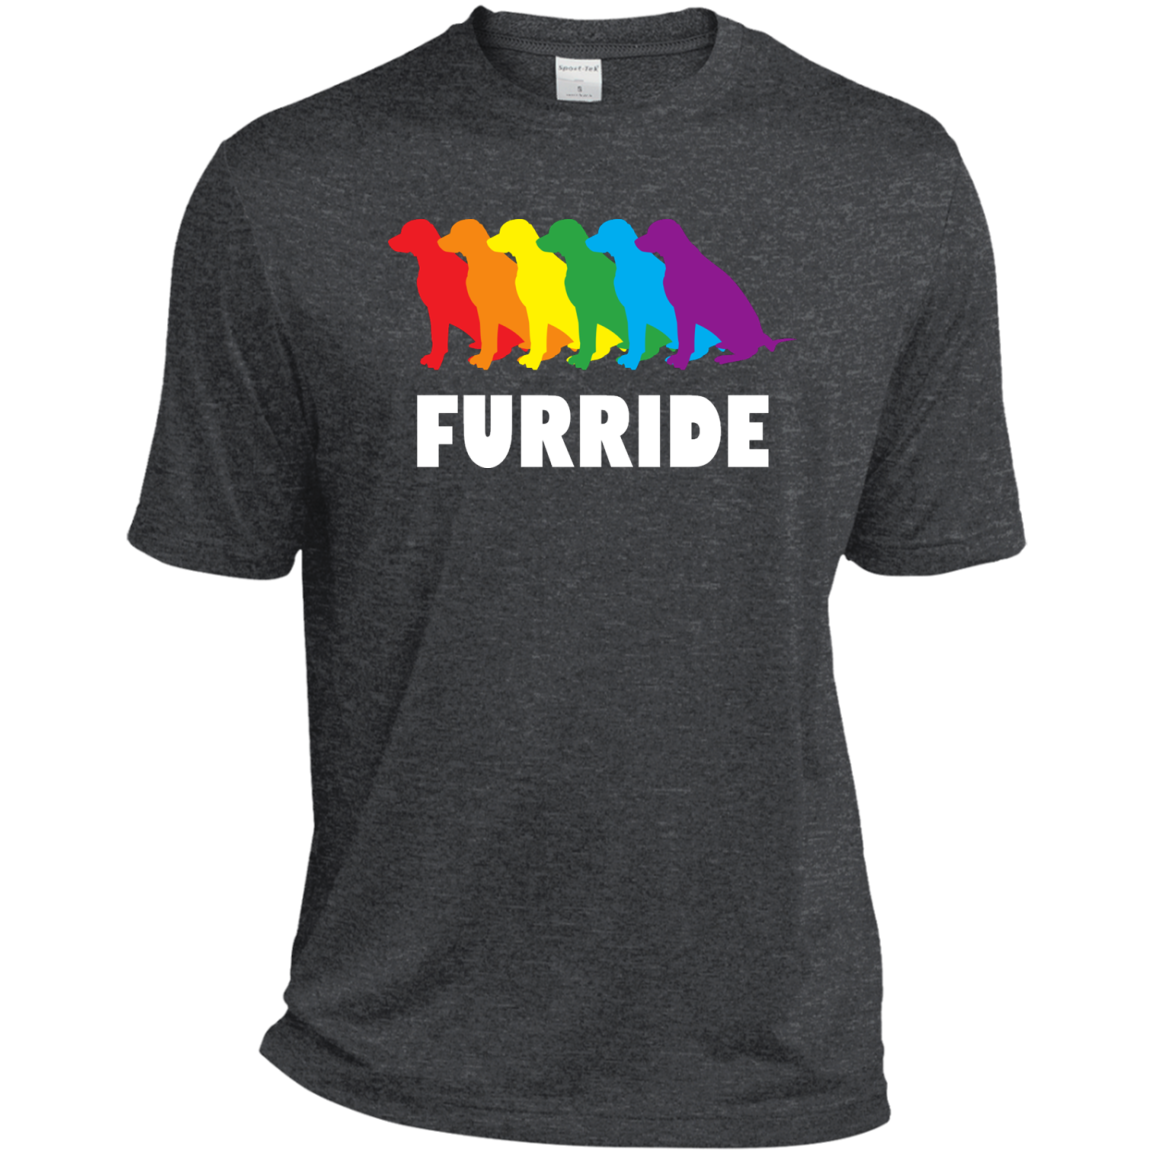 FURRIDE....Pride dark grey tshirt for men | pet lover tshirt